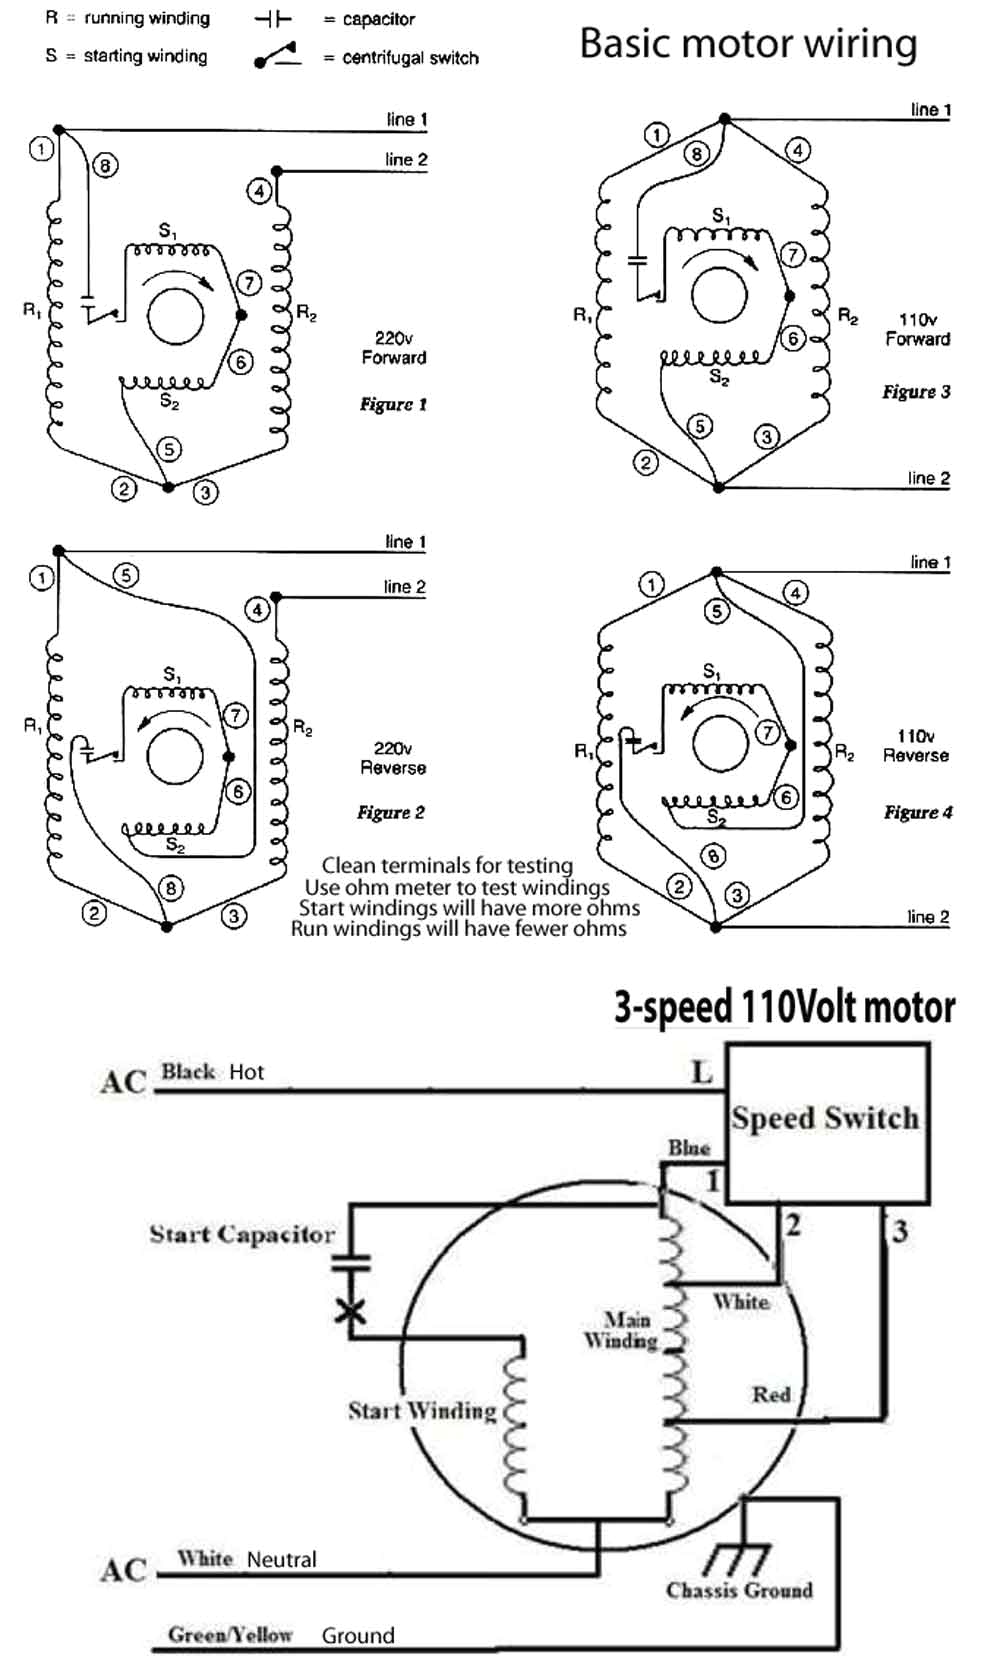 basic motor wiring illustration jpg